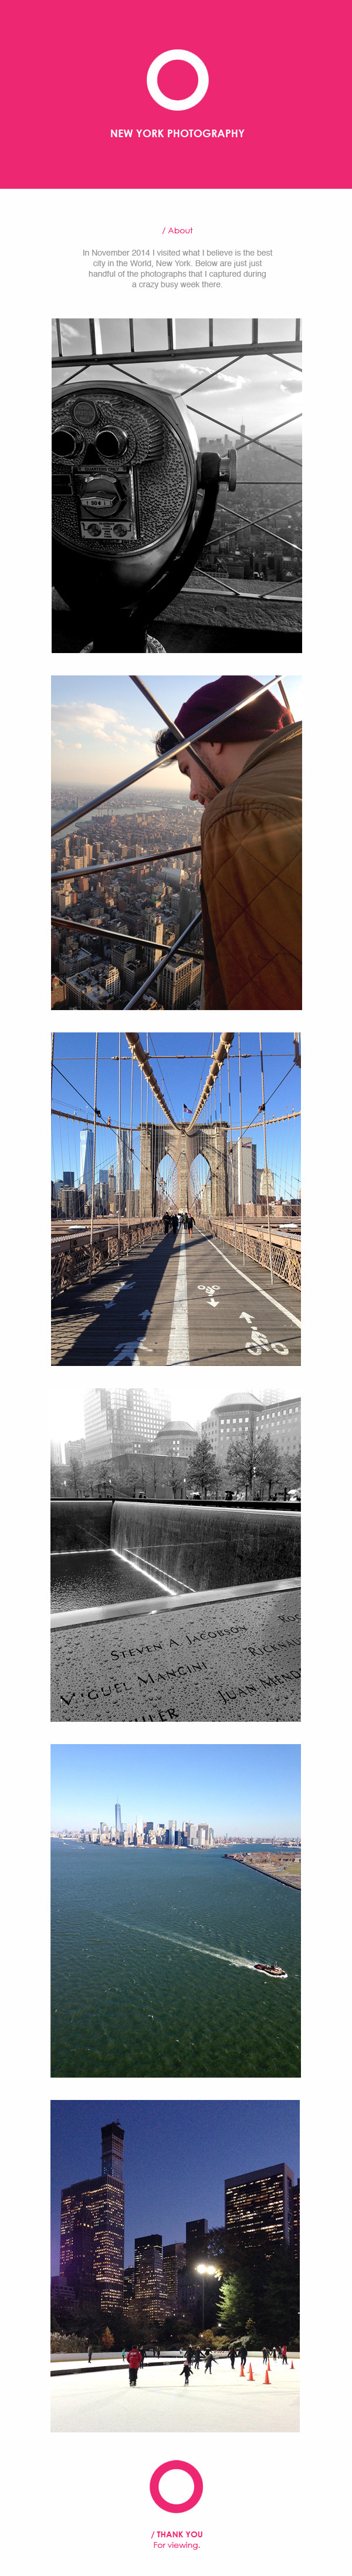 New York black and white colour usa america empire state building Central Park Brooklyn Bridge